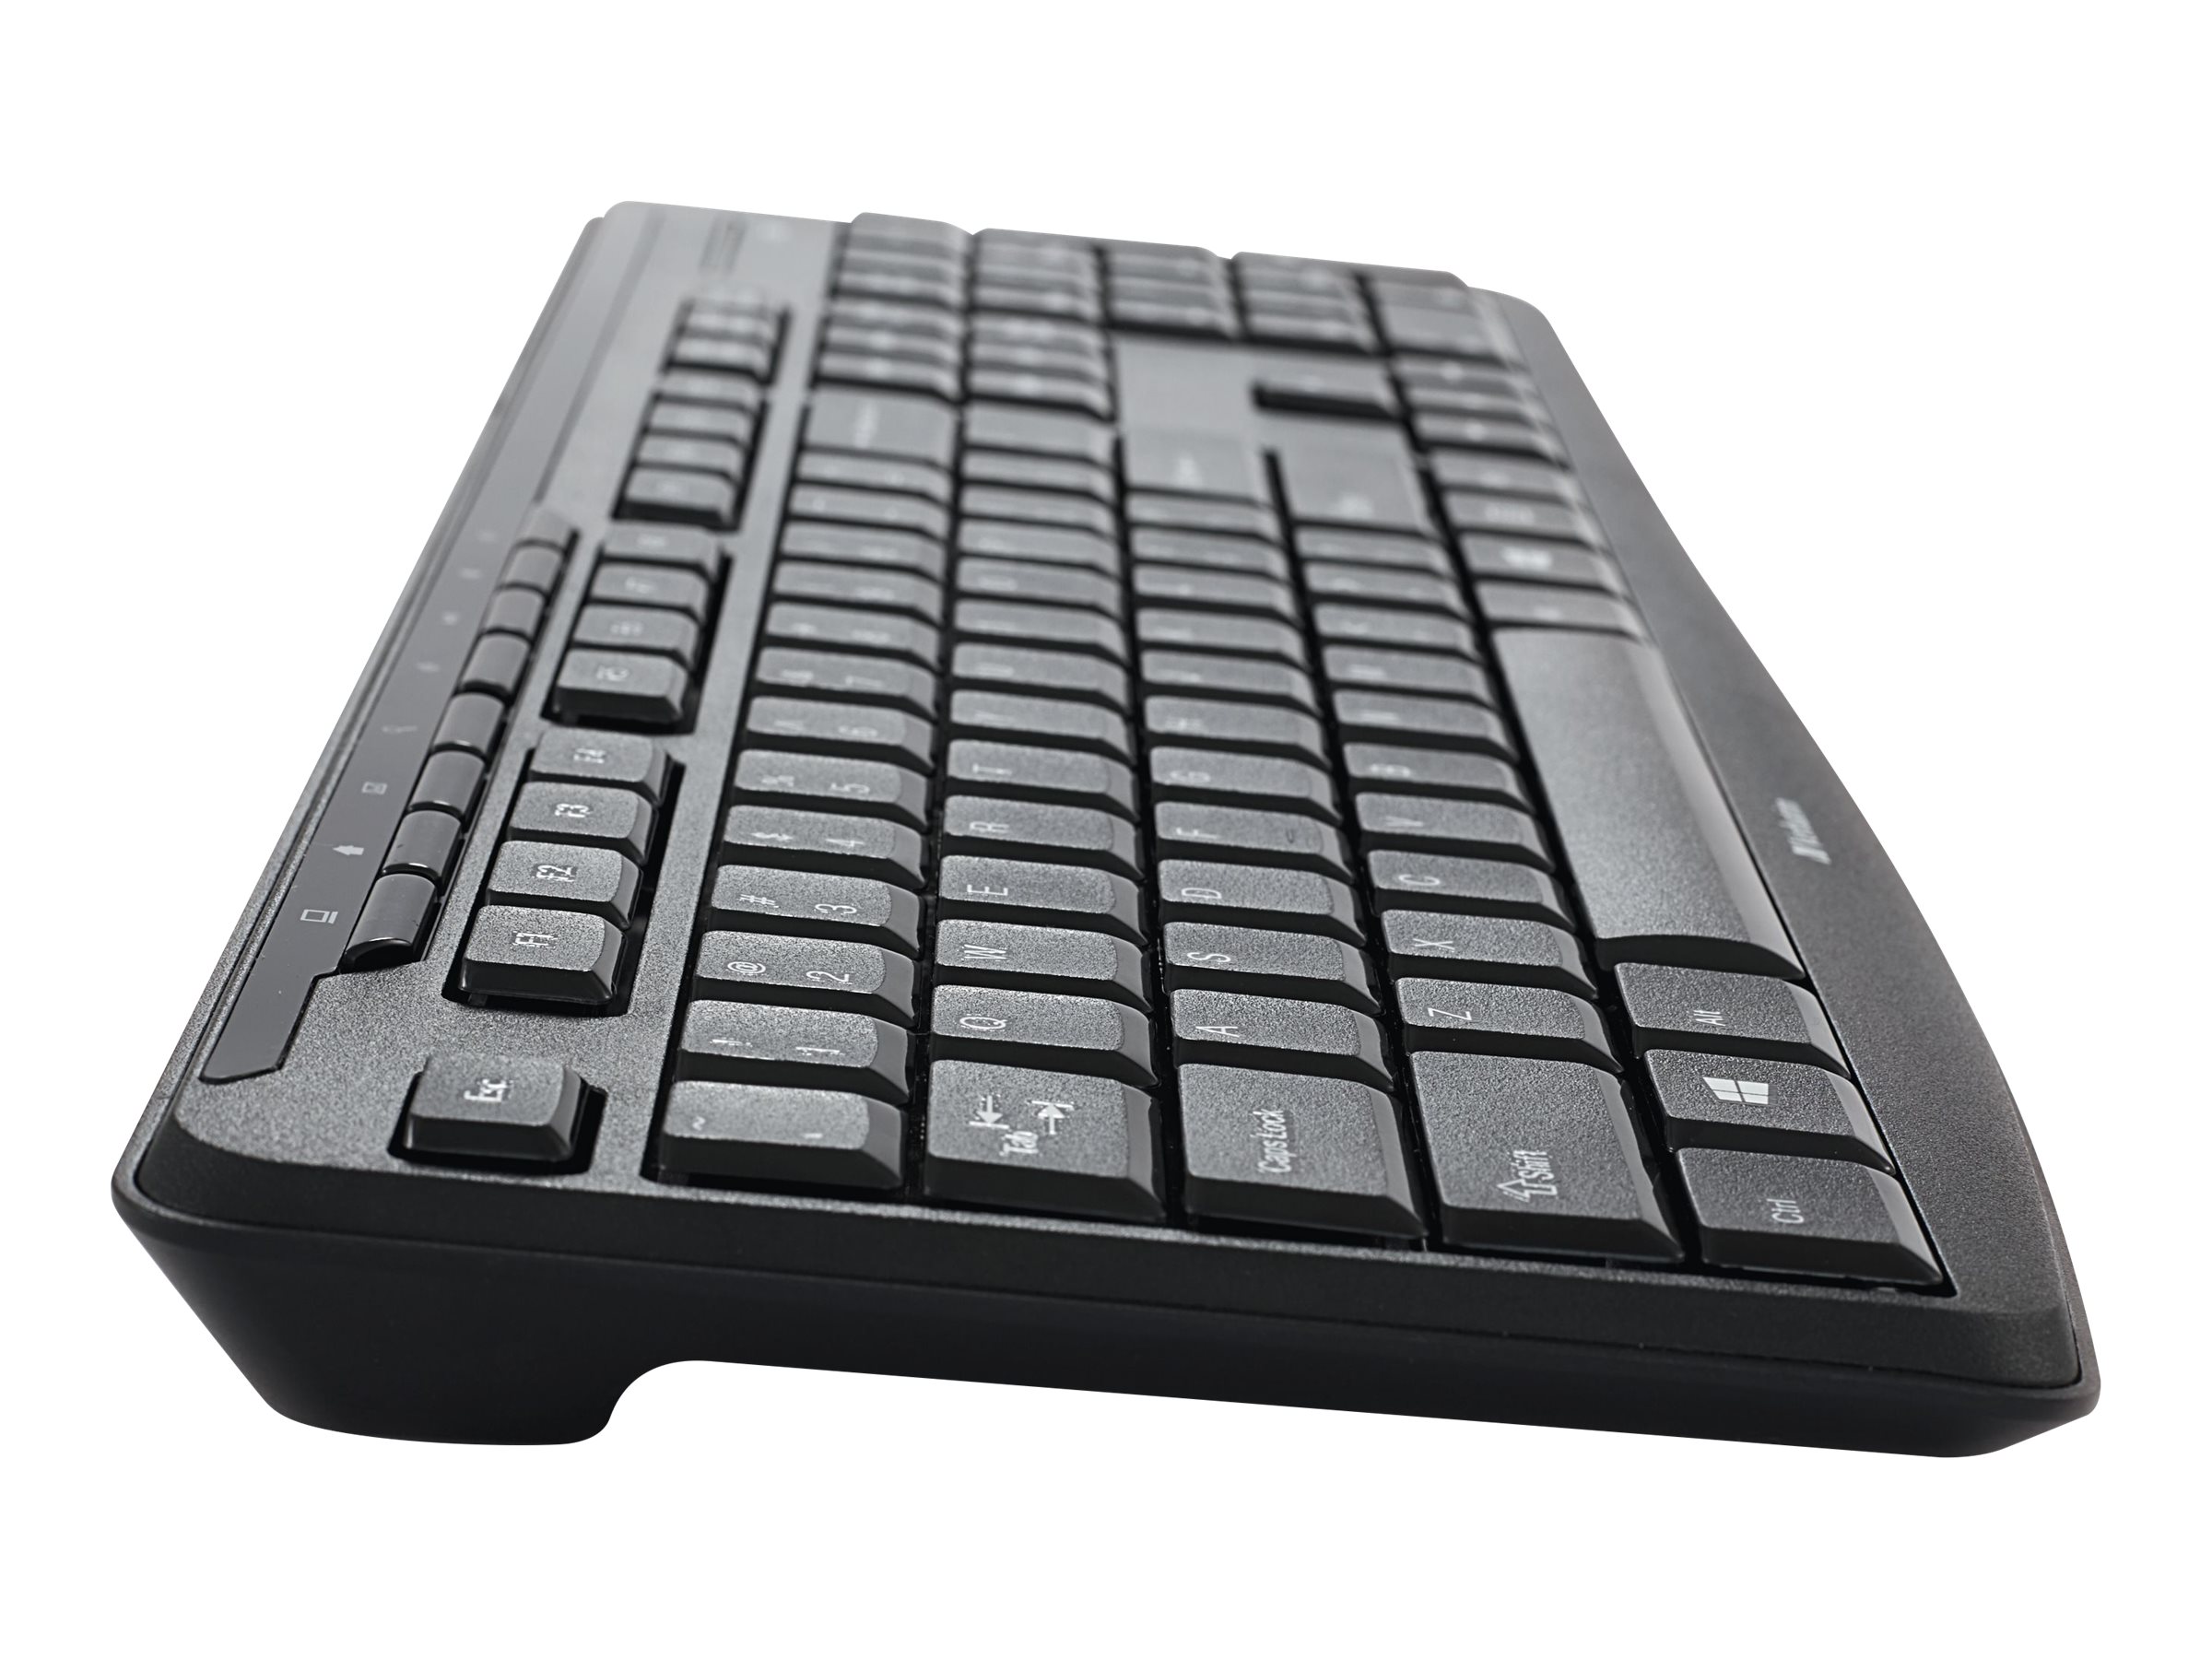 Verbatim Silent - Keyboard and mouse set